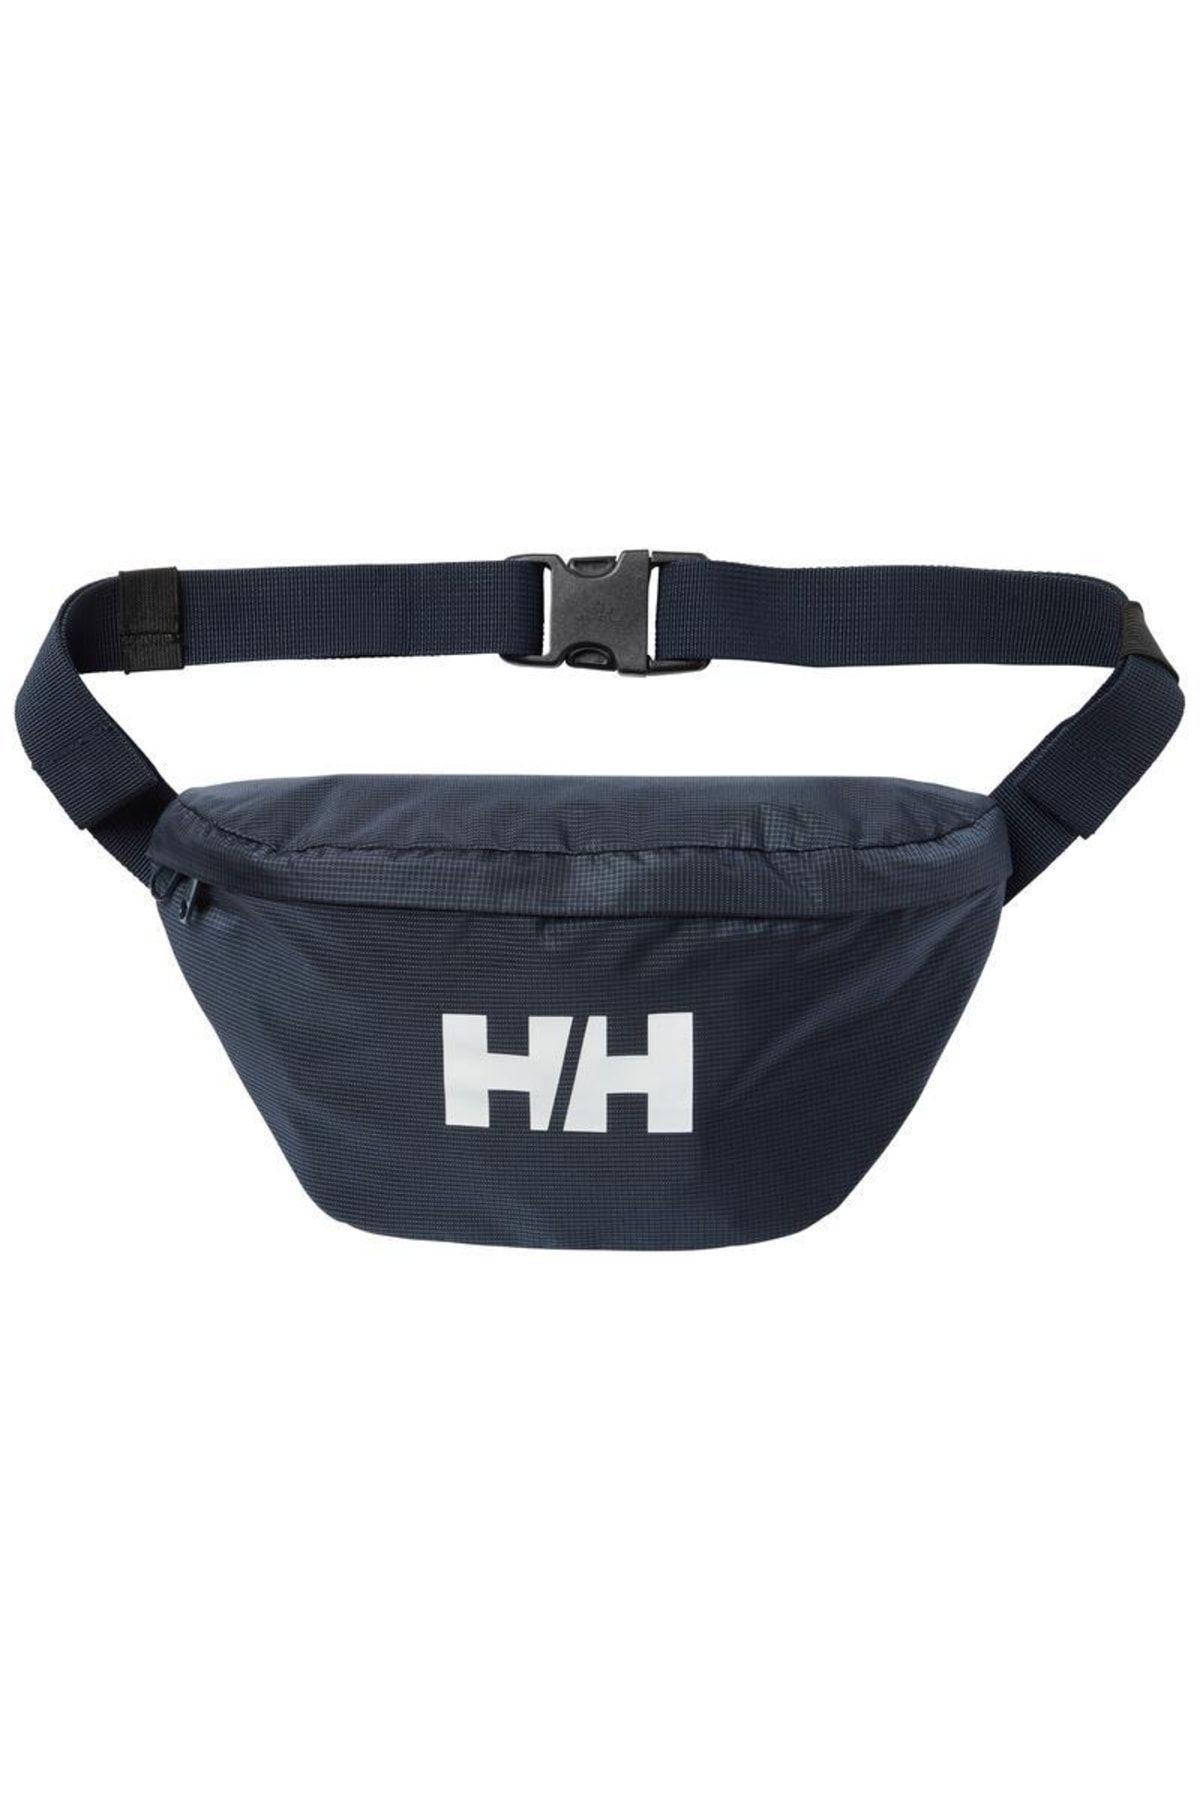 Helly Hansen Hh Hh Logo Waıst Bag